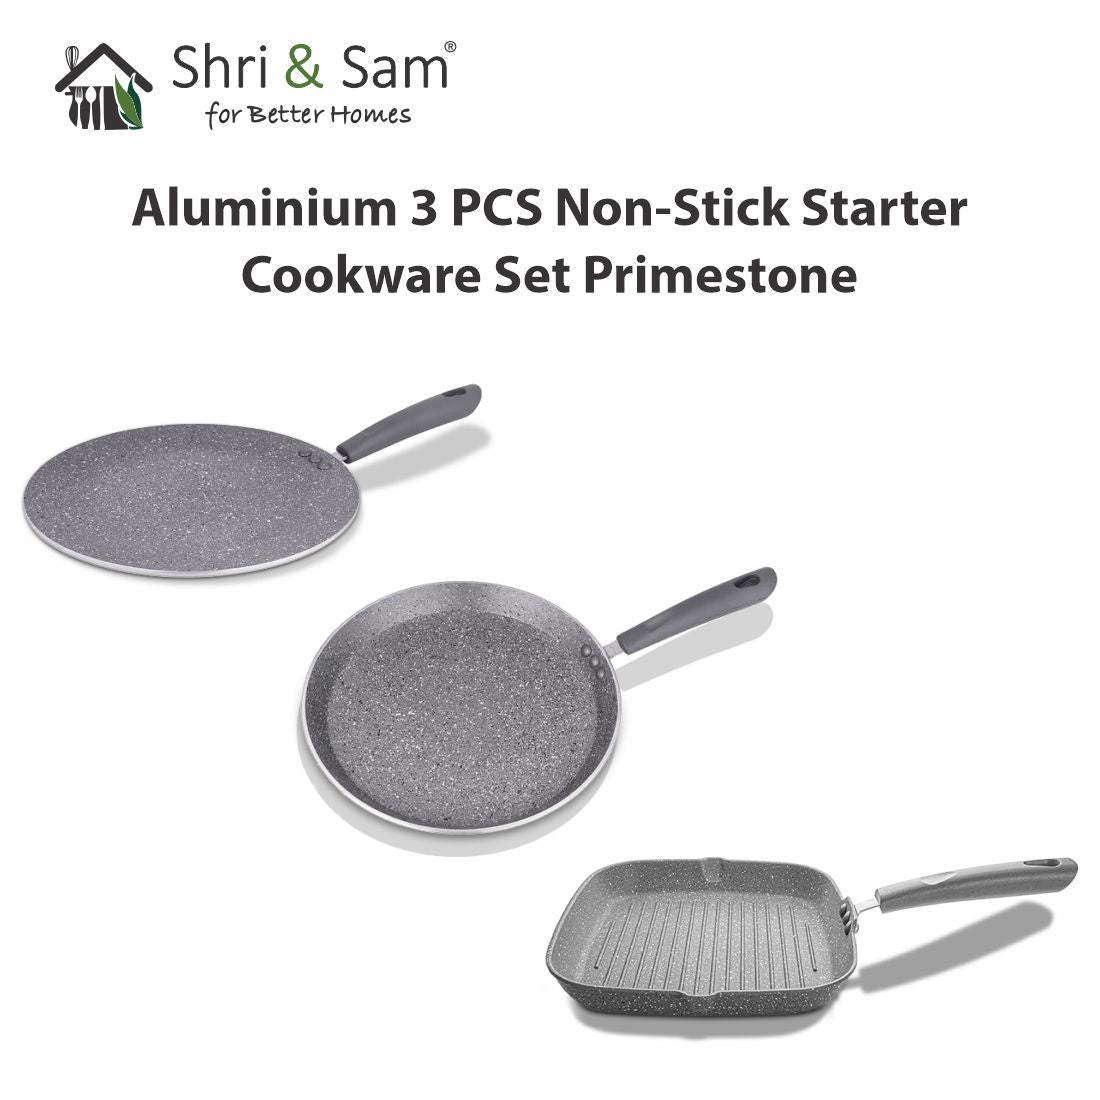 Aluminium 3 PCS Non-Stick STARTER Cookware Set Primestone